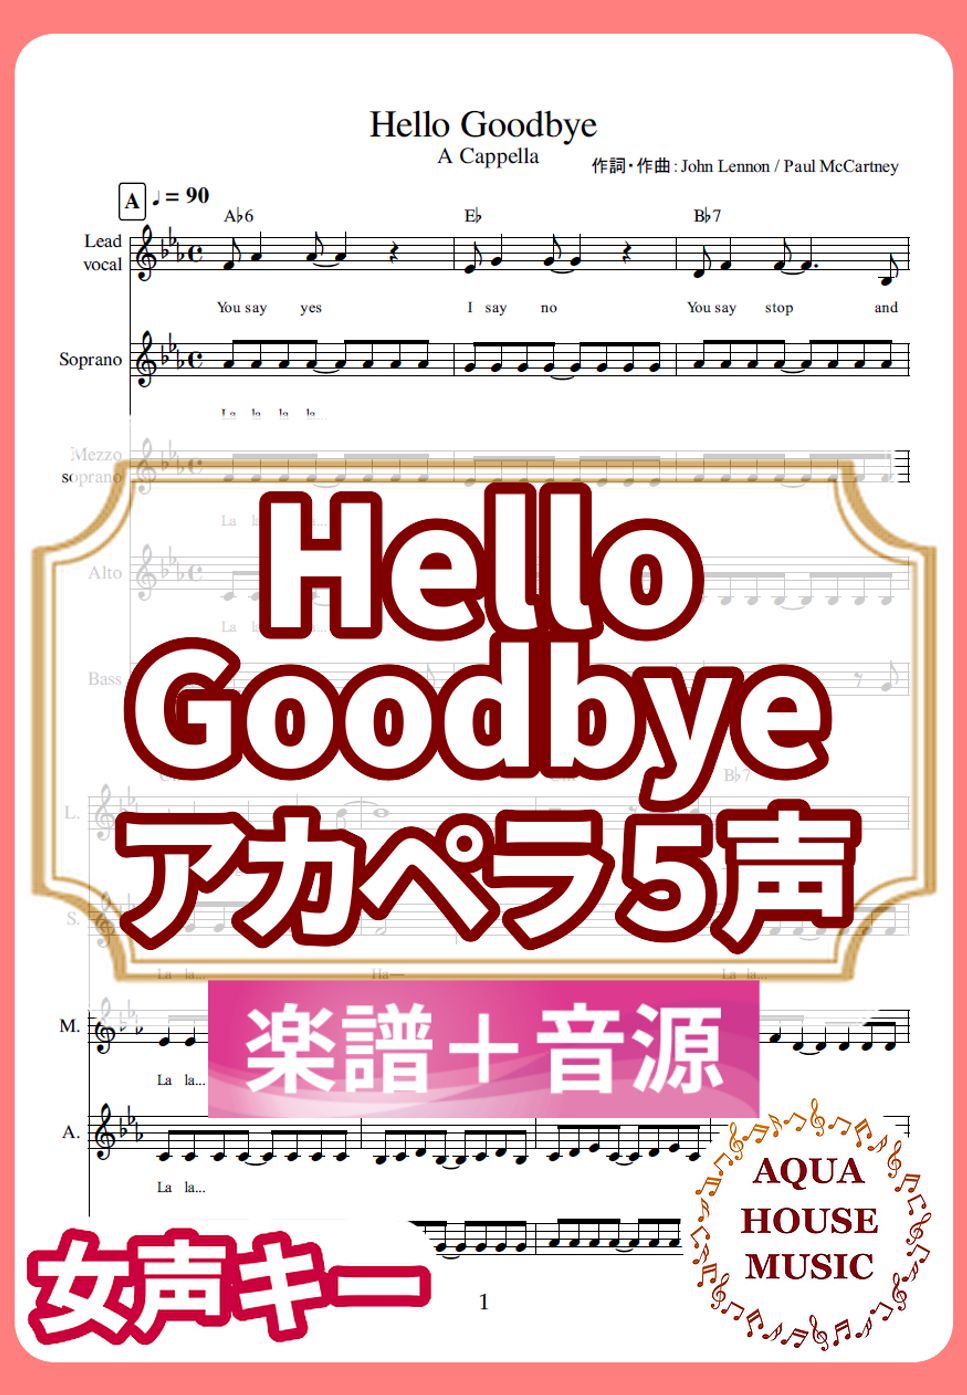 The Beatles - Hello Goodbye (アカペラ楽譜＋練習音源セット販売) by 飯田 亜紗子